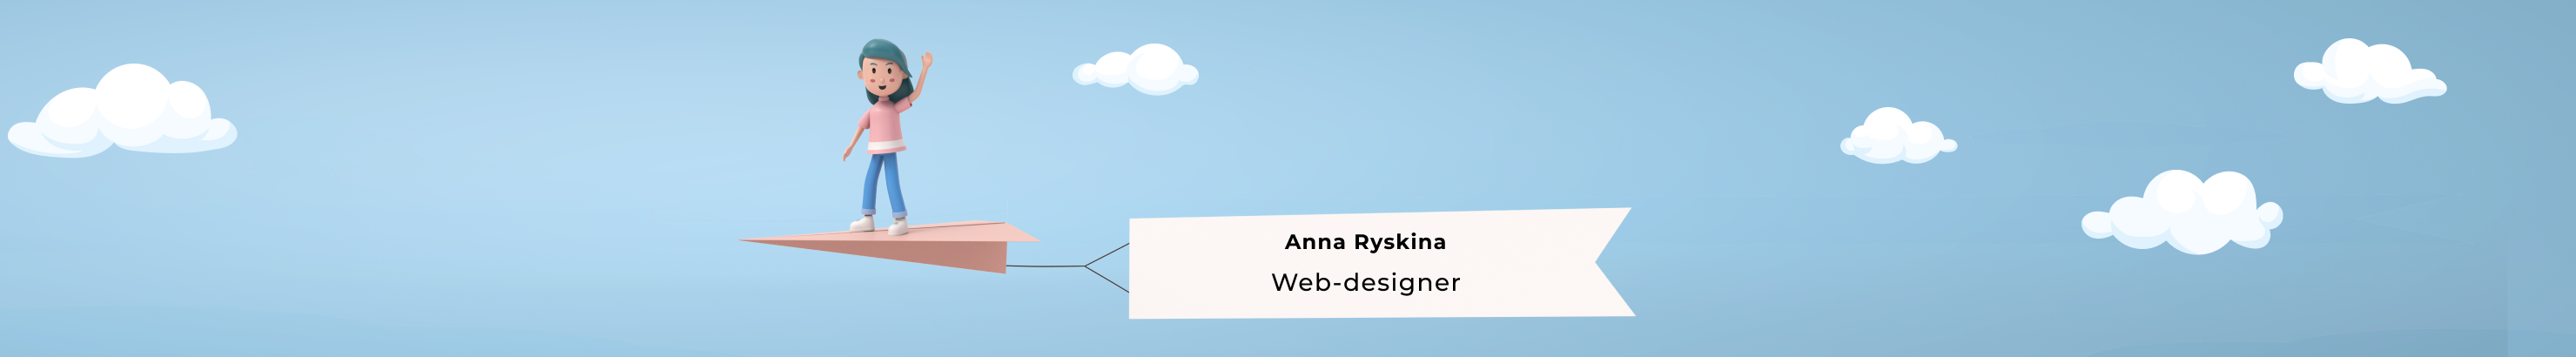 Anna Ryskina's profile banner